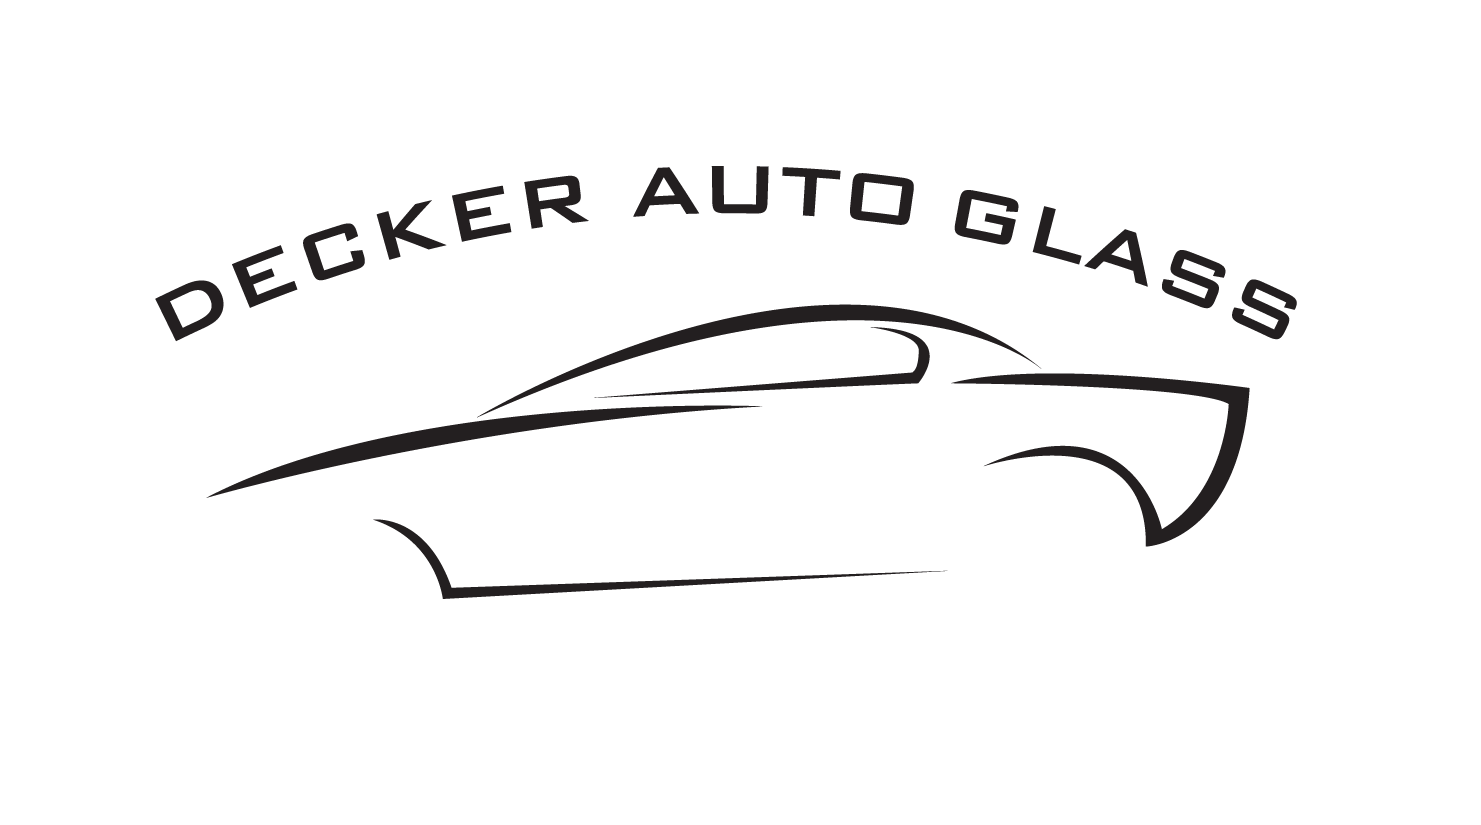 Company logo of Decker Auto Glass